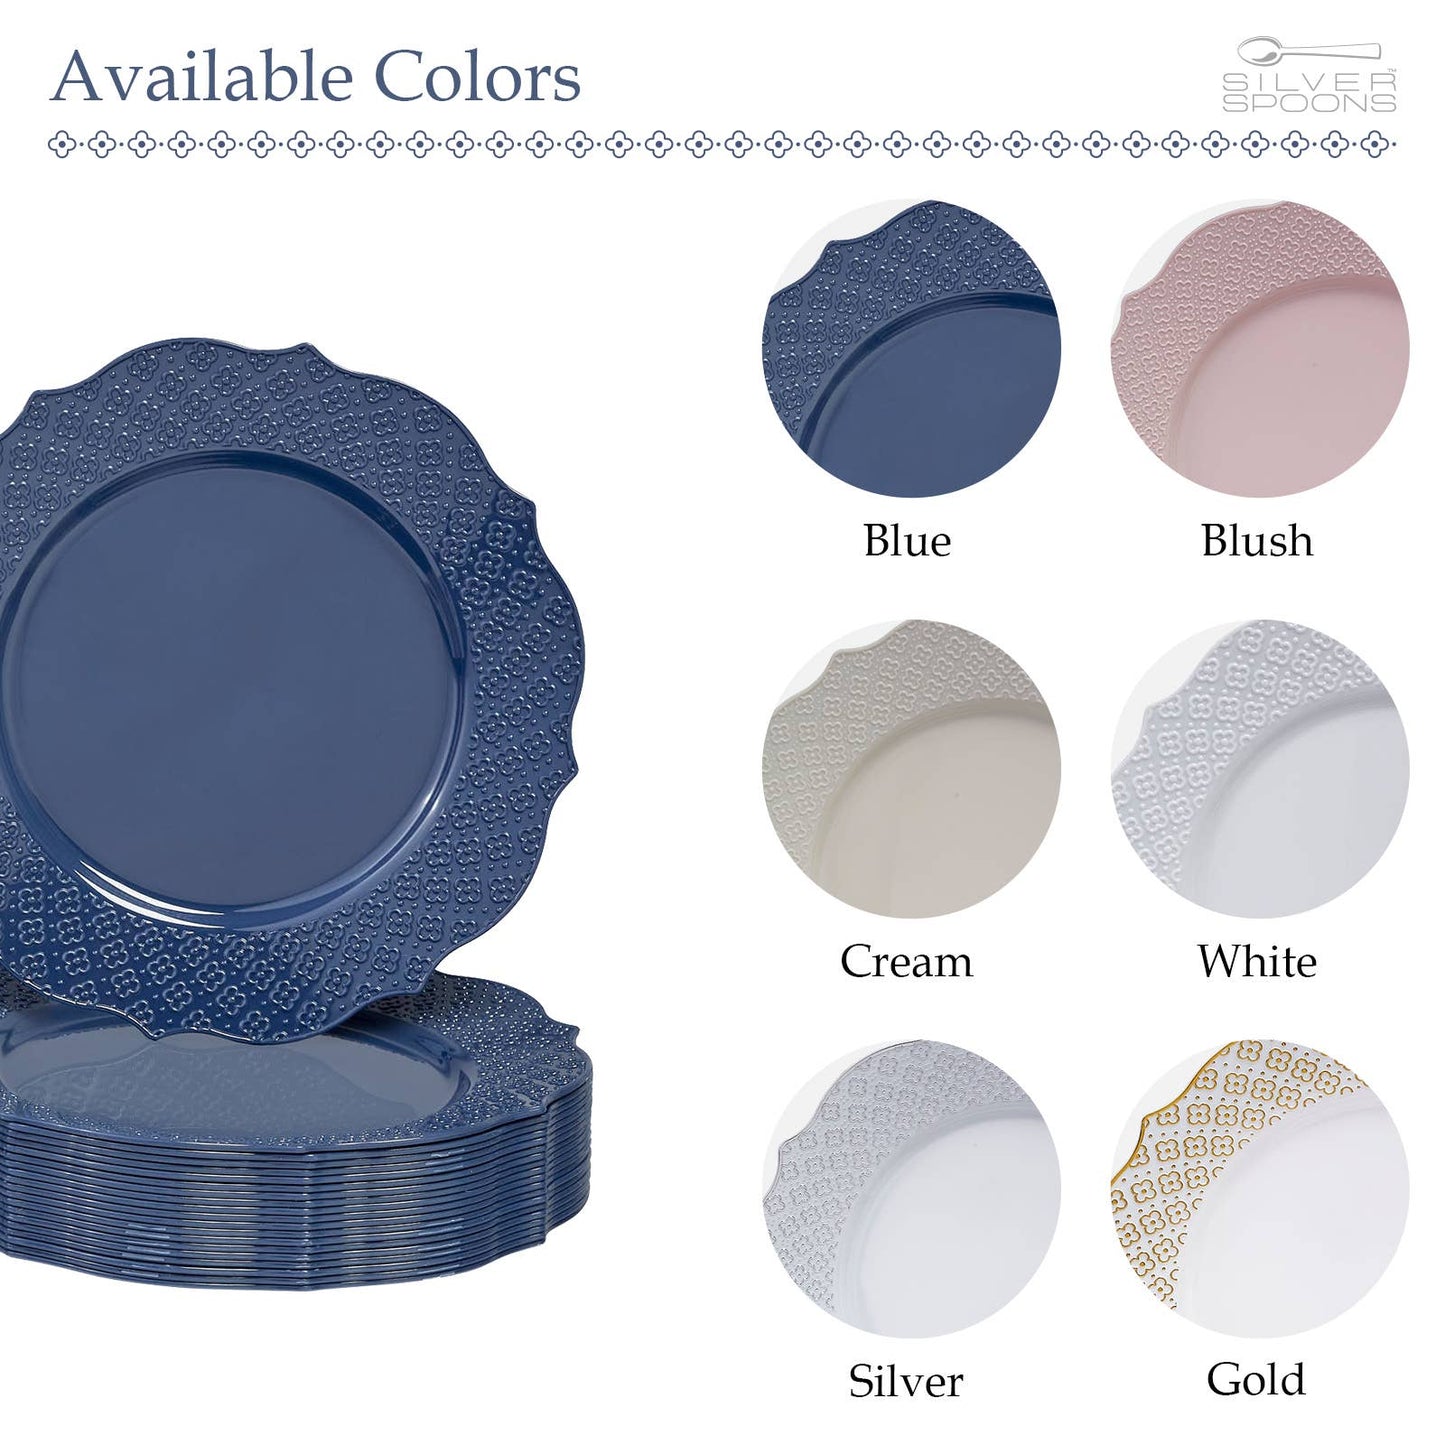 Blue Plates: Dinner Plates